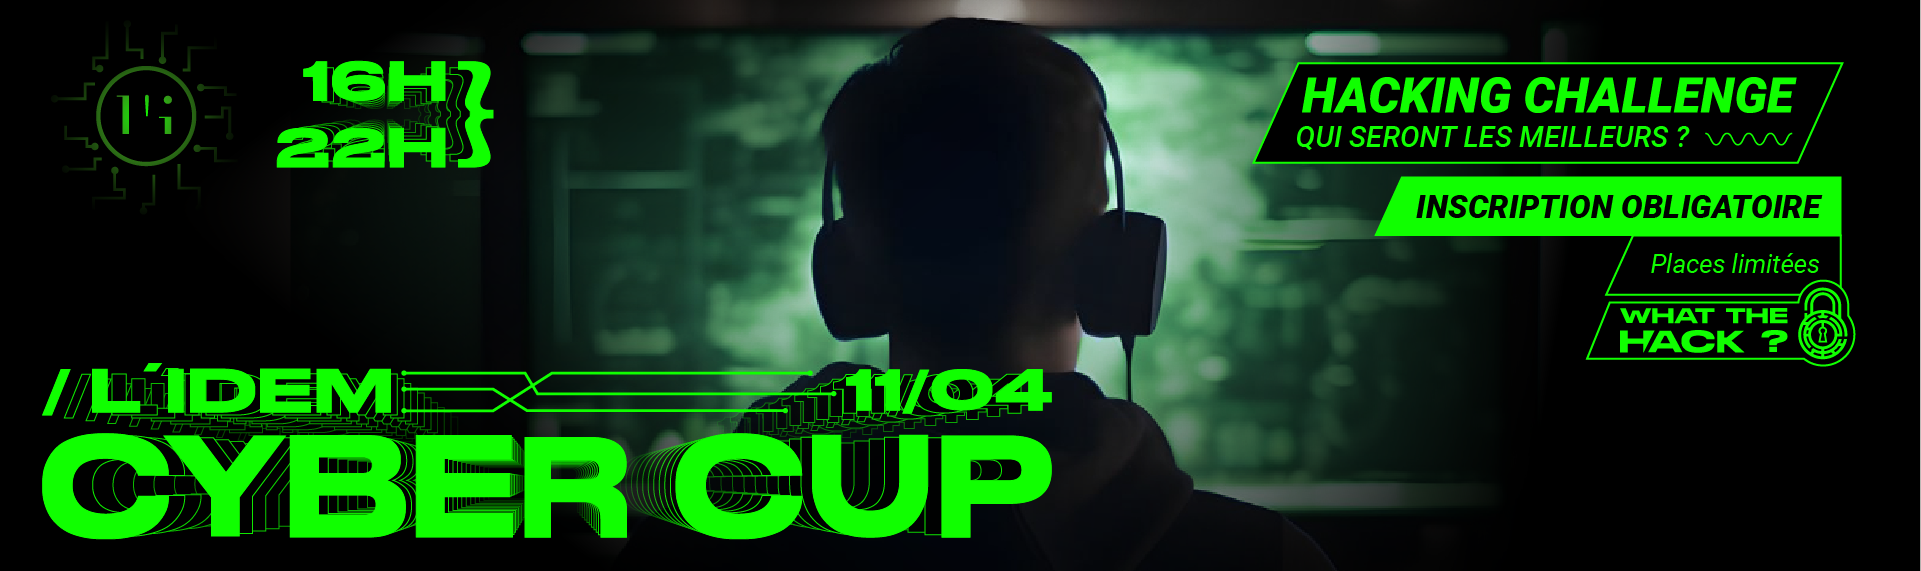 L'IDEM Cyber Cup Hacking Challenge